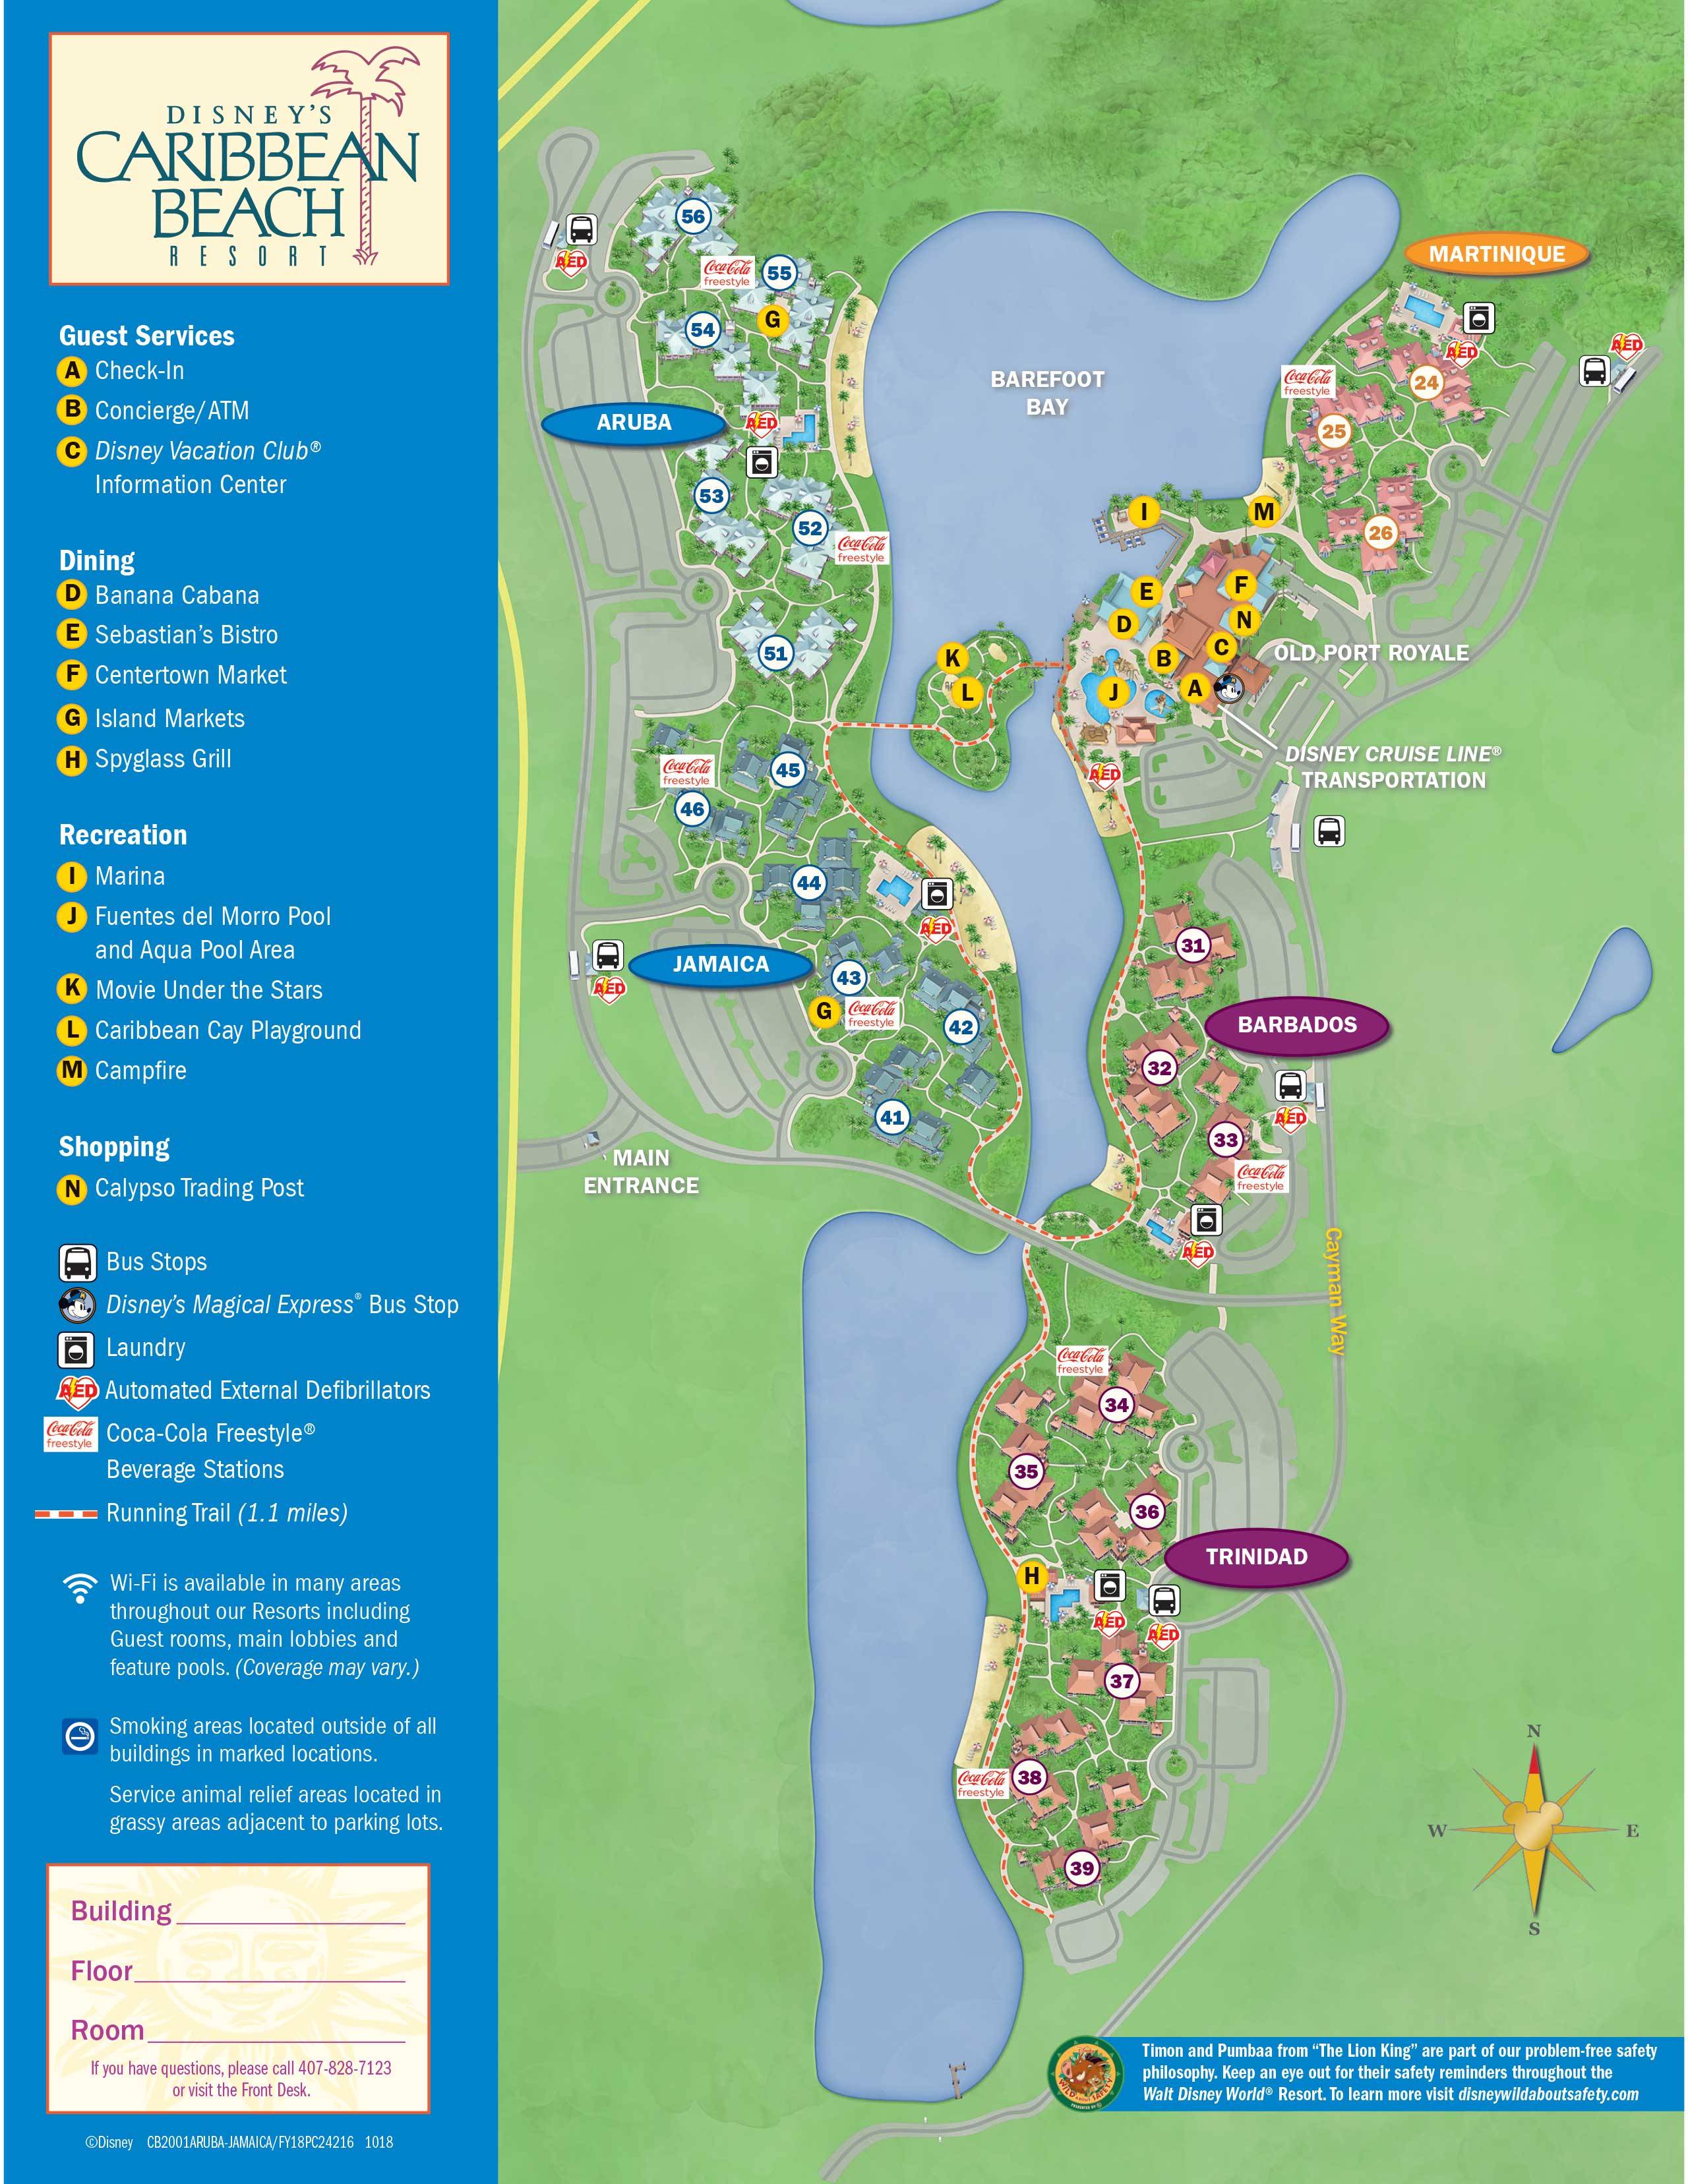 PHOTOS - New guide map for Disney's Caribbean Beach Resort